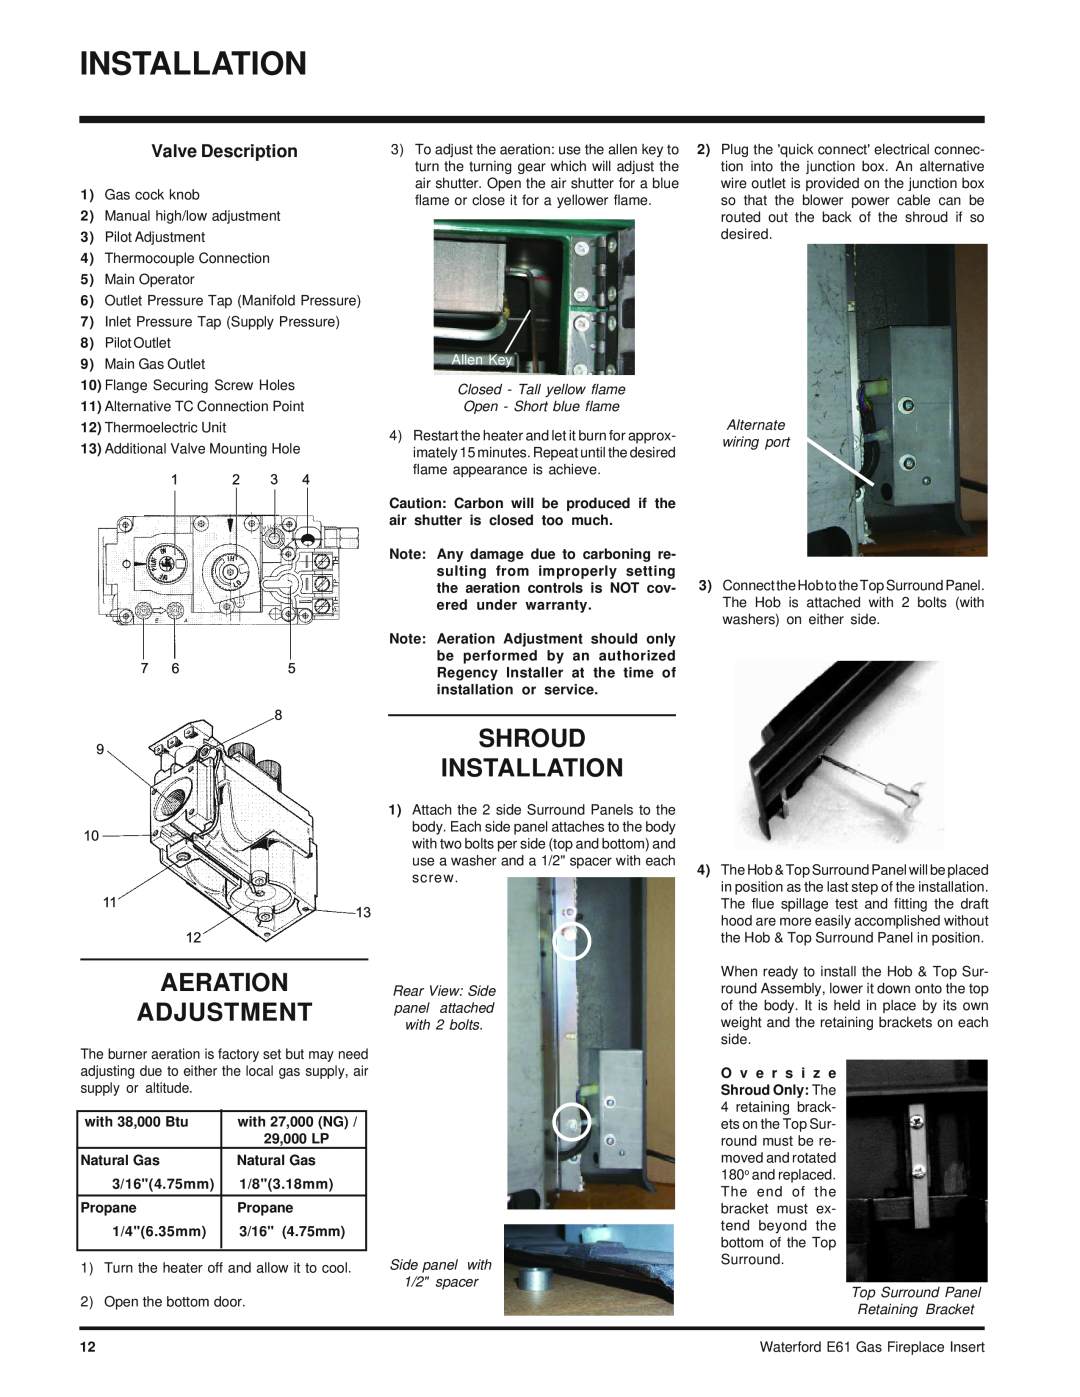 Waterford Appliances E61-NG Aeration Adjustment, Shroud Installation, Valve Description, Allen Key, Alternate wiring port 